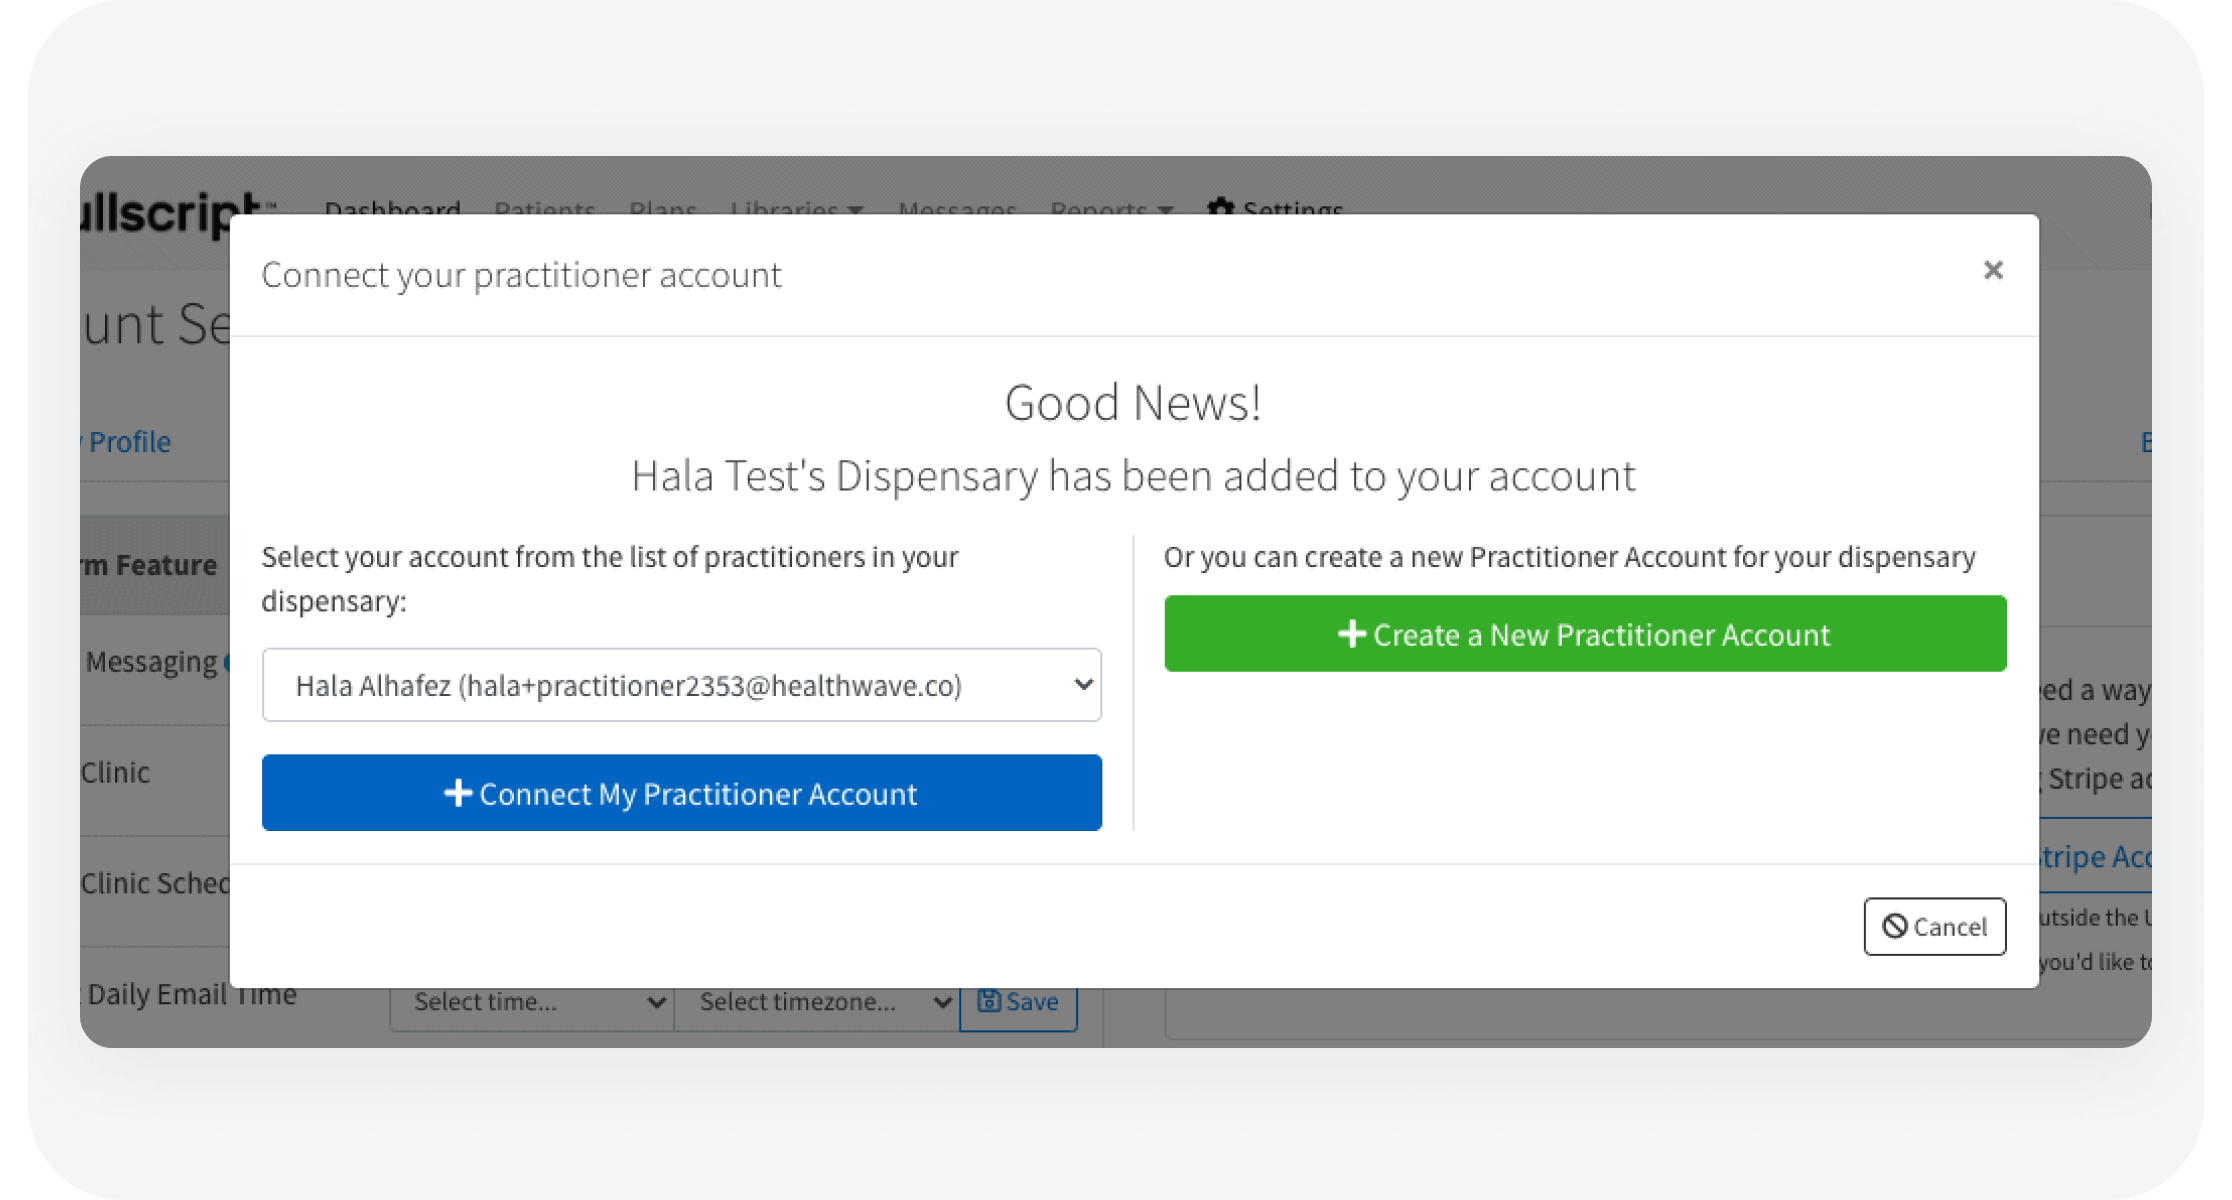 integrations partner screenshot of Fullscript authorization pop-up